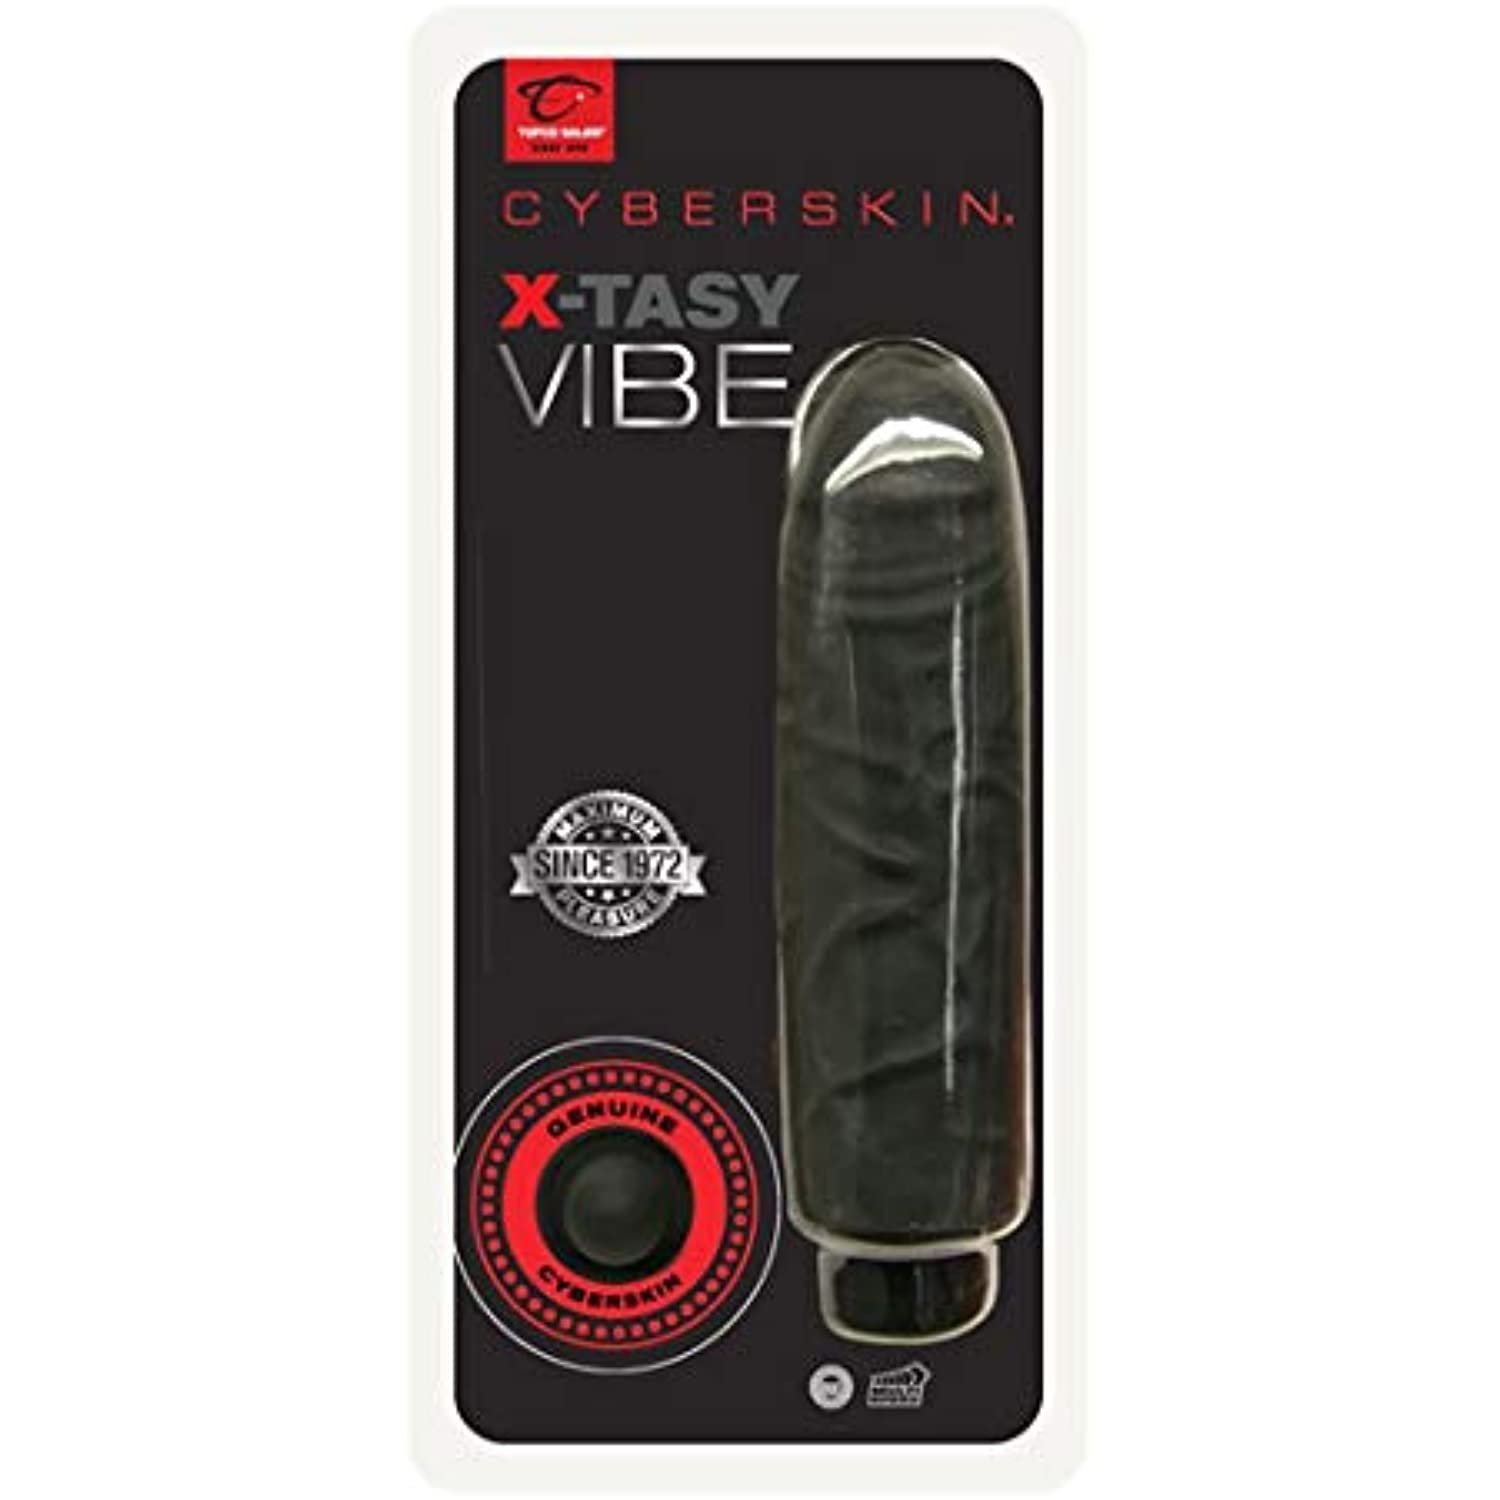 Cyberskin black vibrator